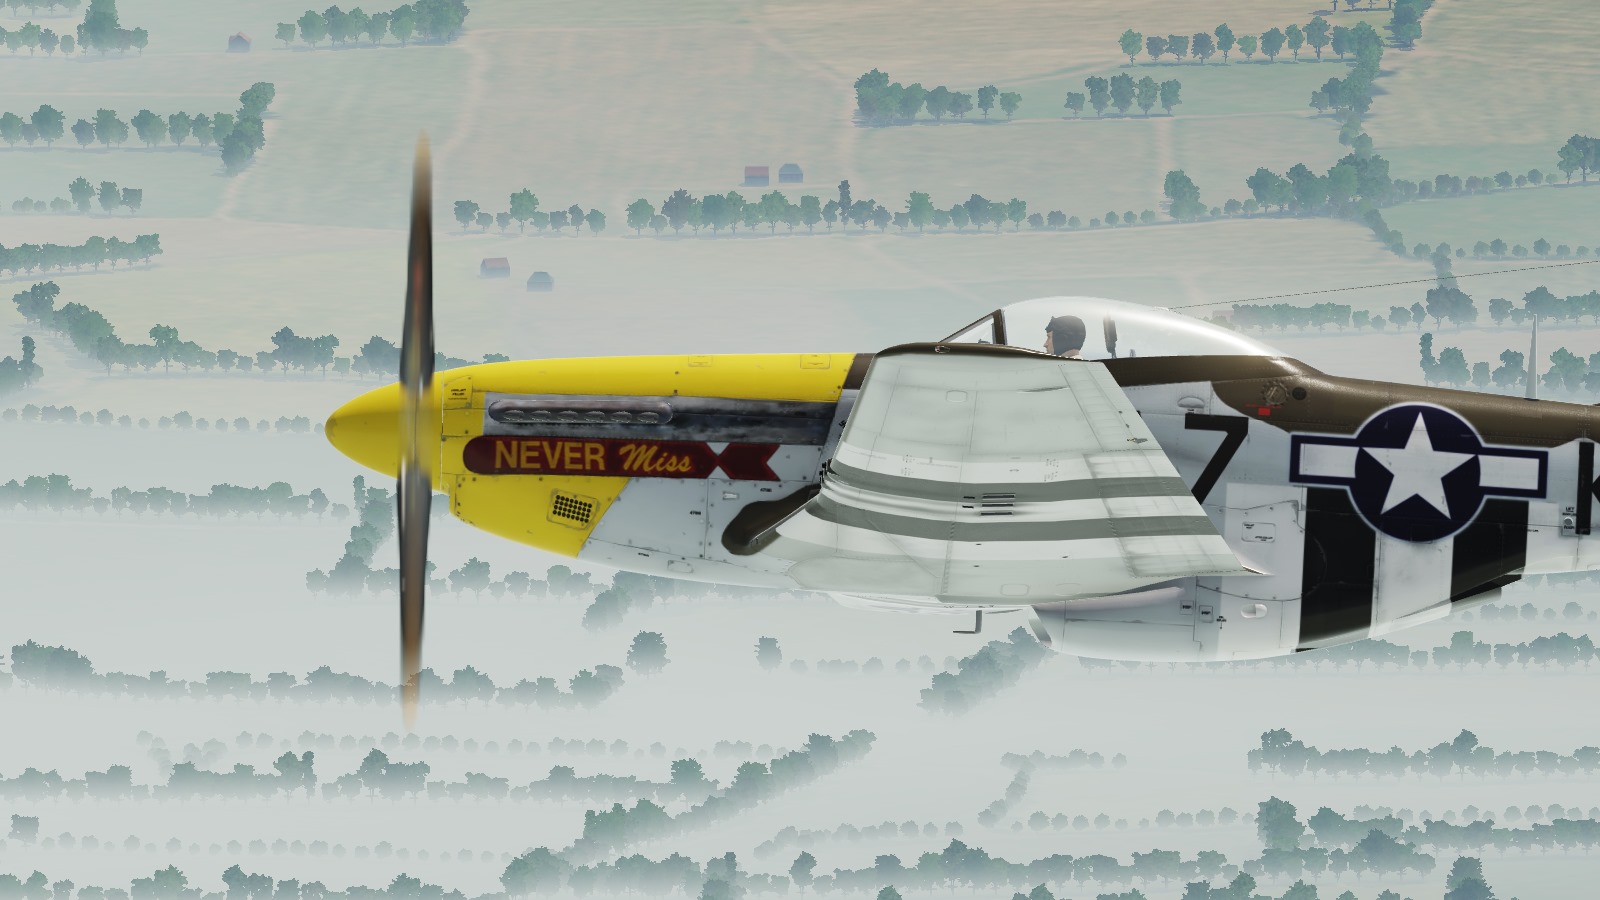 P-51D Mustang 44-73275  "Never Miss"